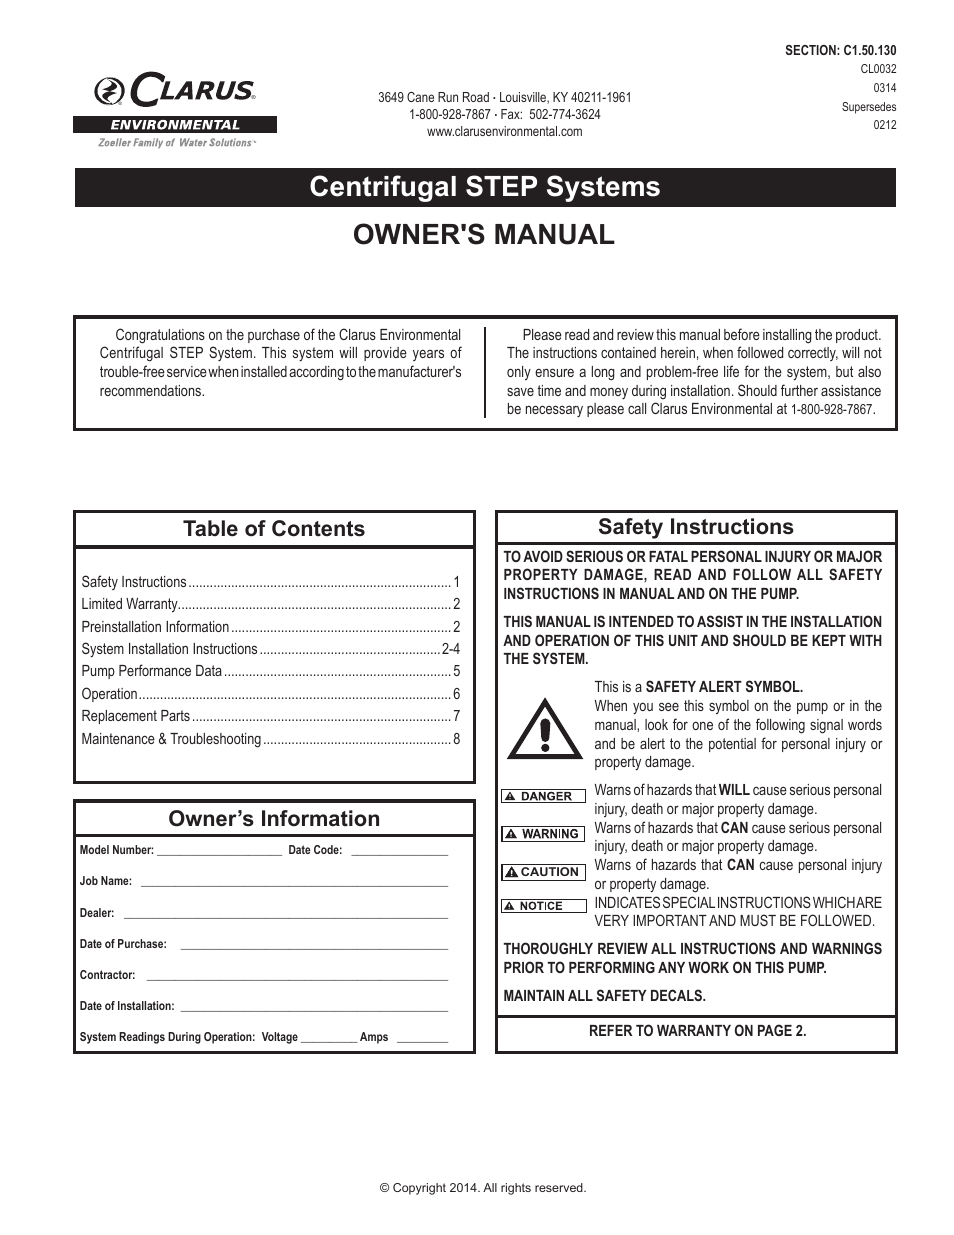 Centrifugal STEP Systems